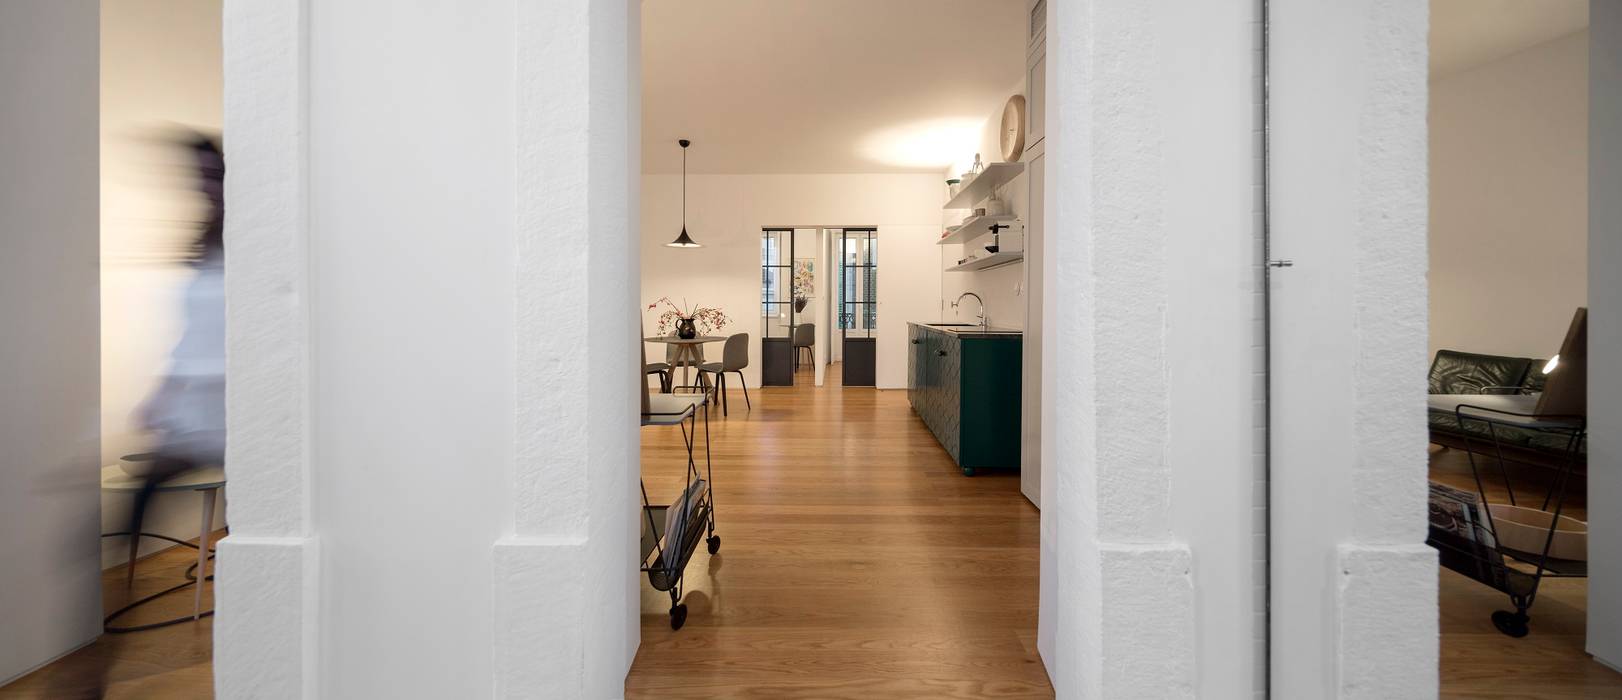 Príncipe real apartment lisbon, fala fala Modern corridor, hallway & stairs